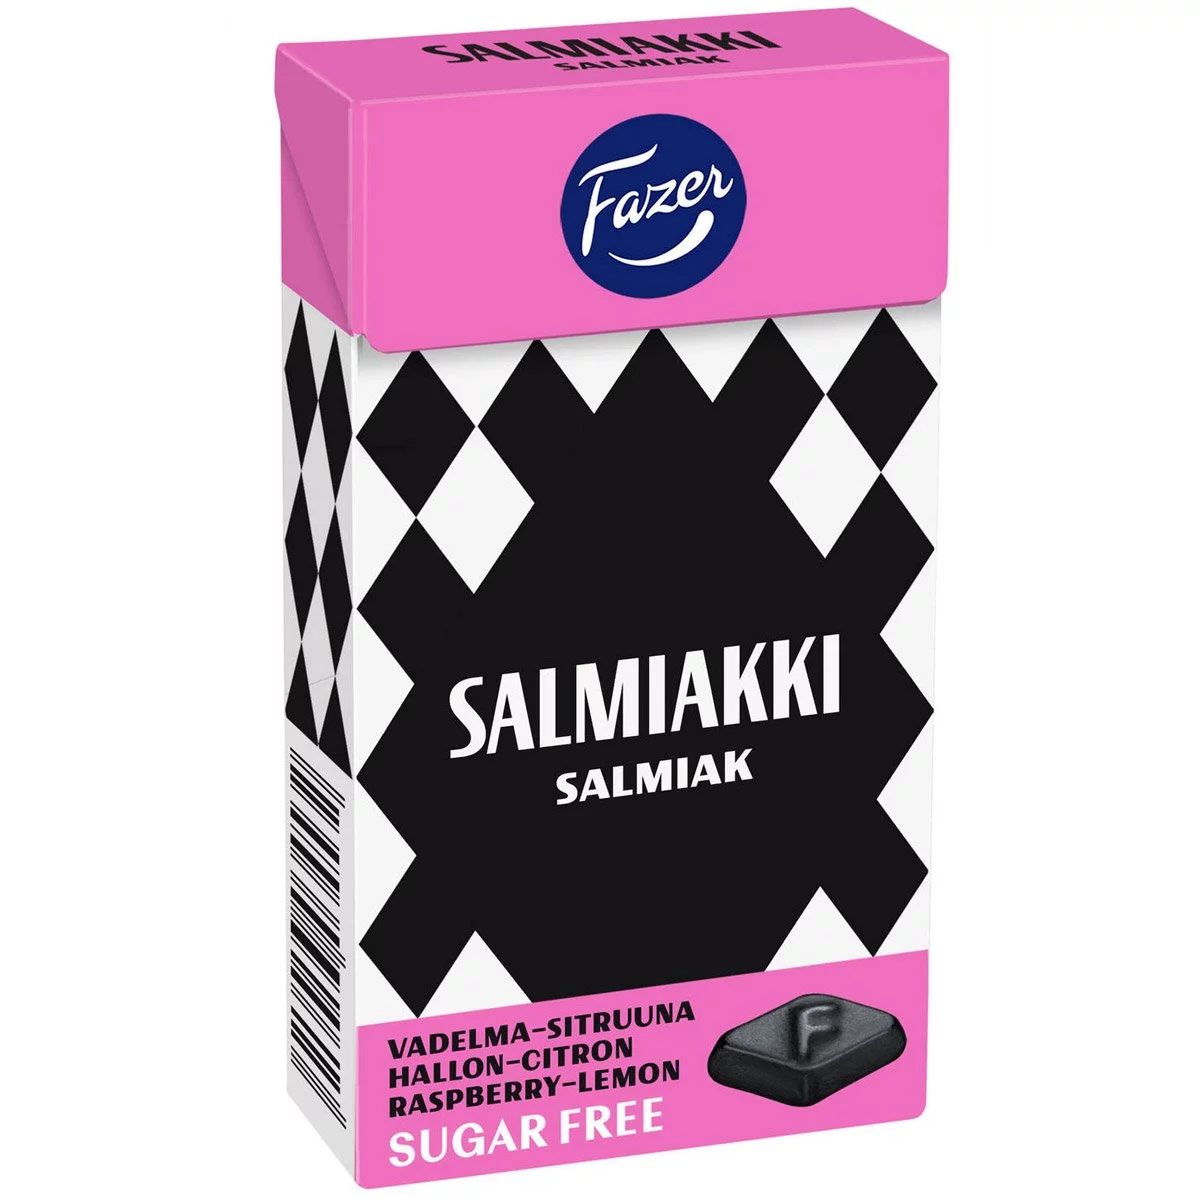 Fazer Salmiakki - Salmiak Pastillen Hallon-Citron (40g) 1